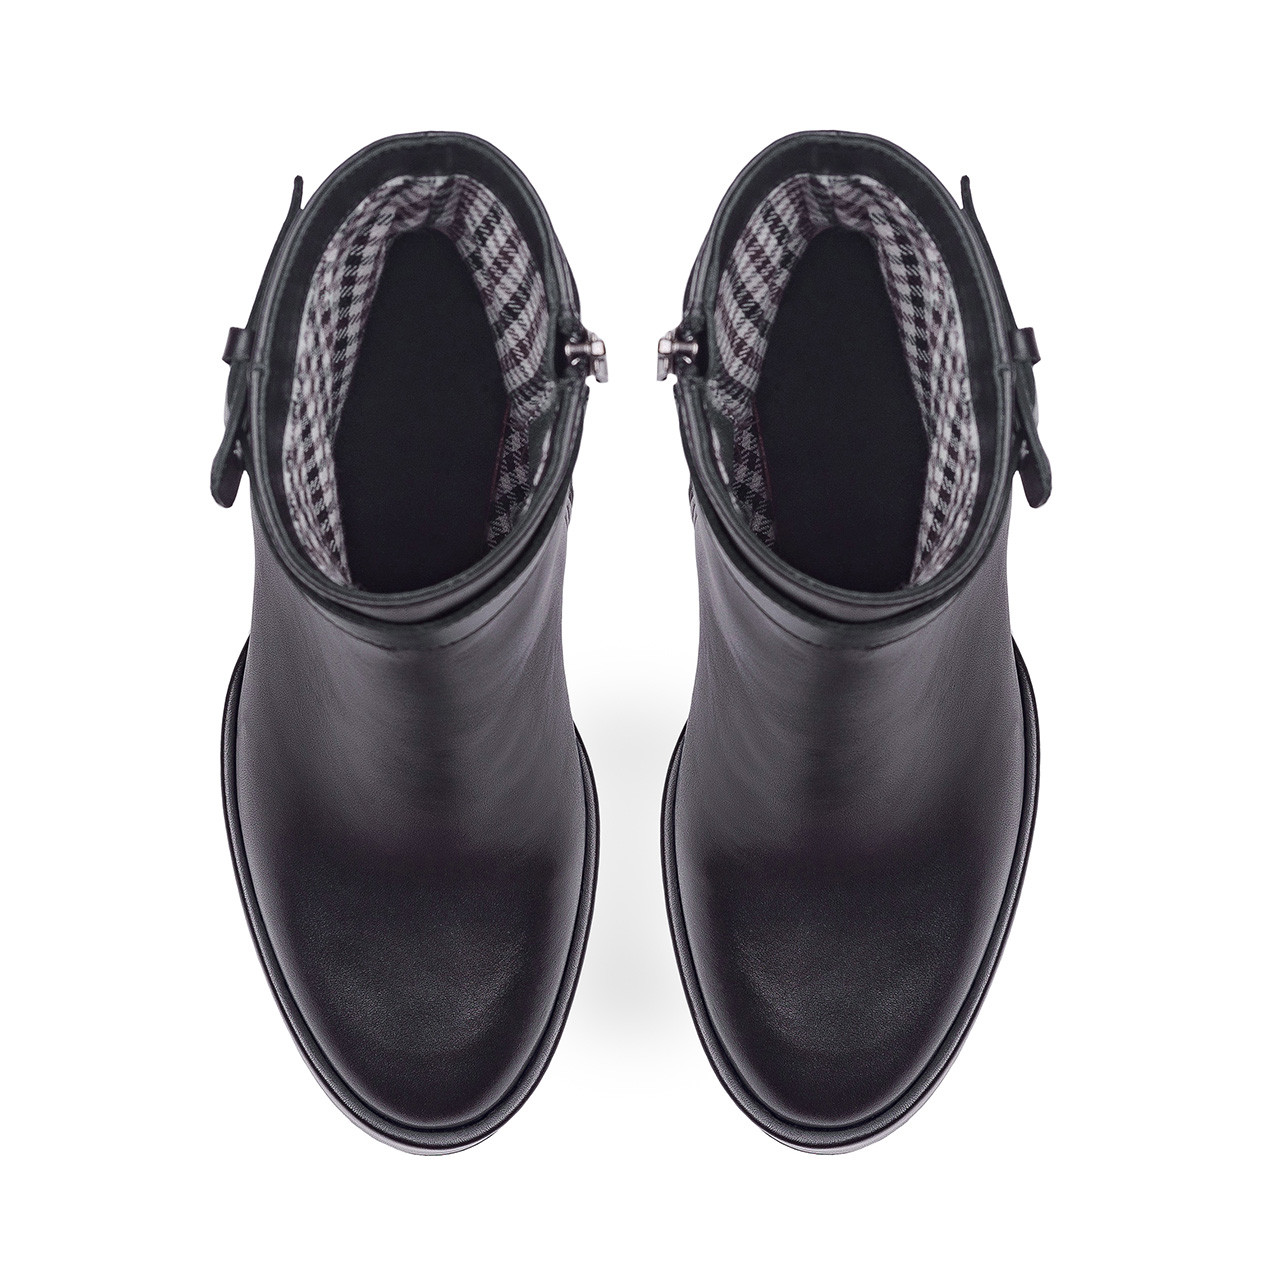 Handmade black leather ankle boots on the platform heel